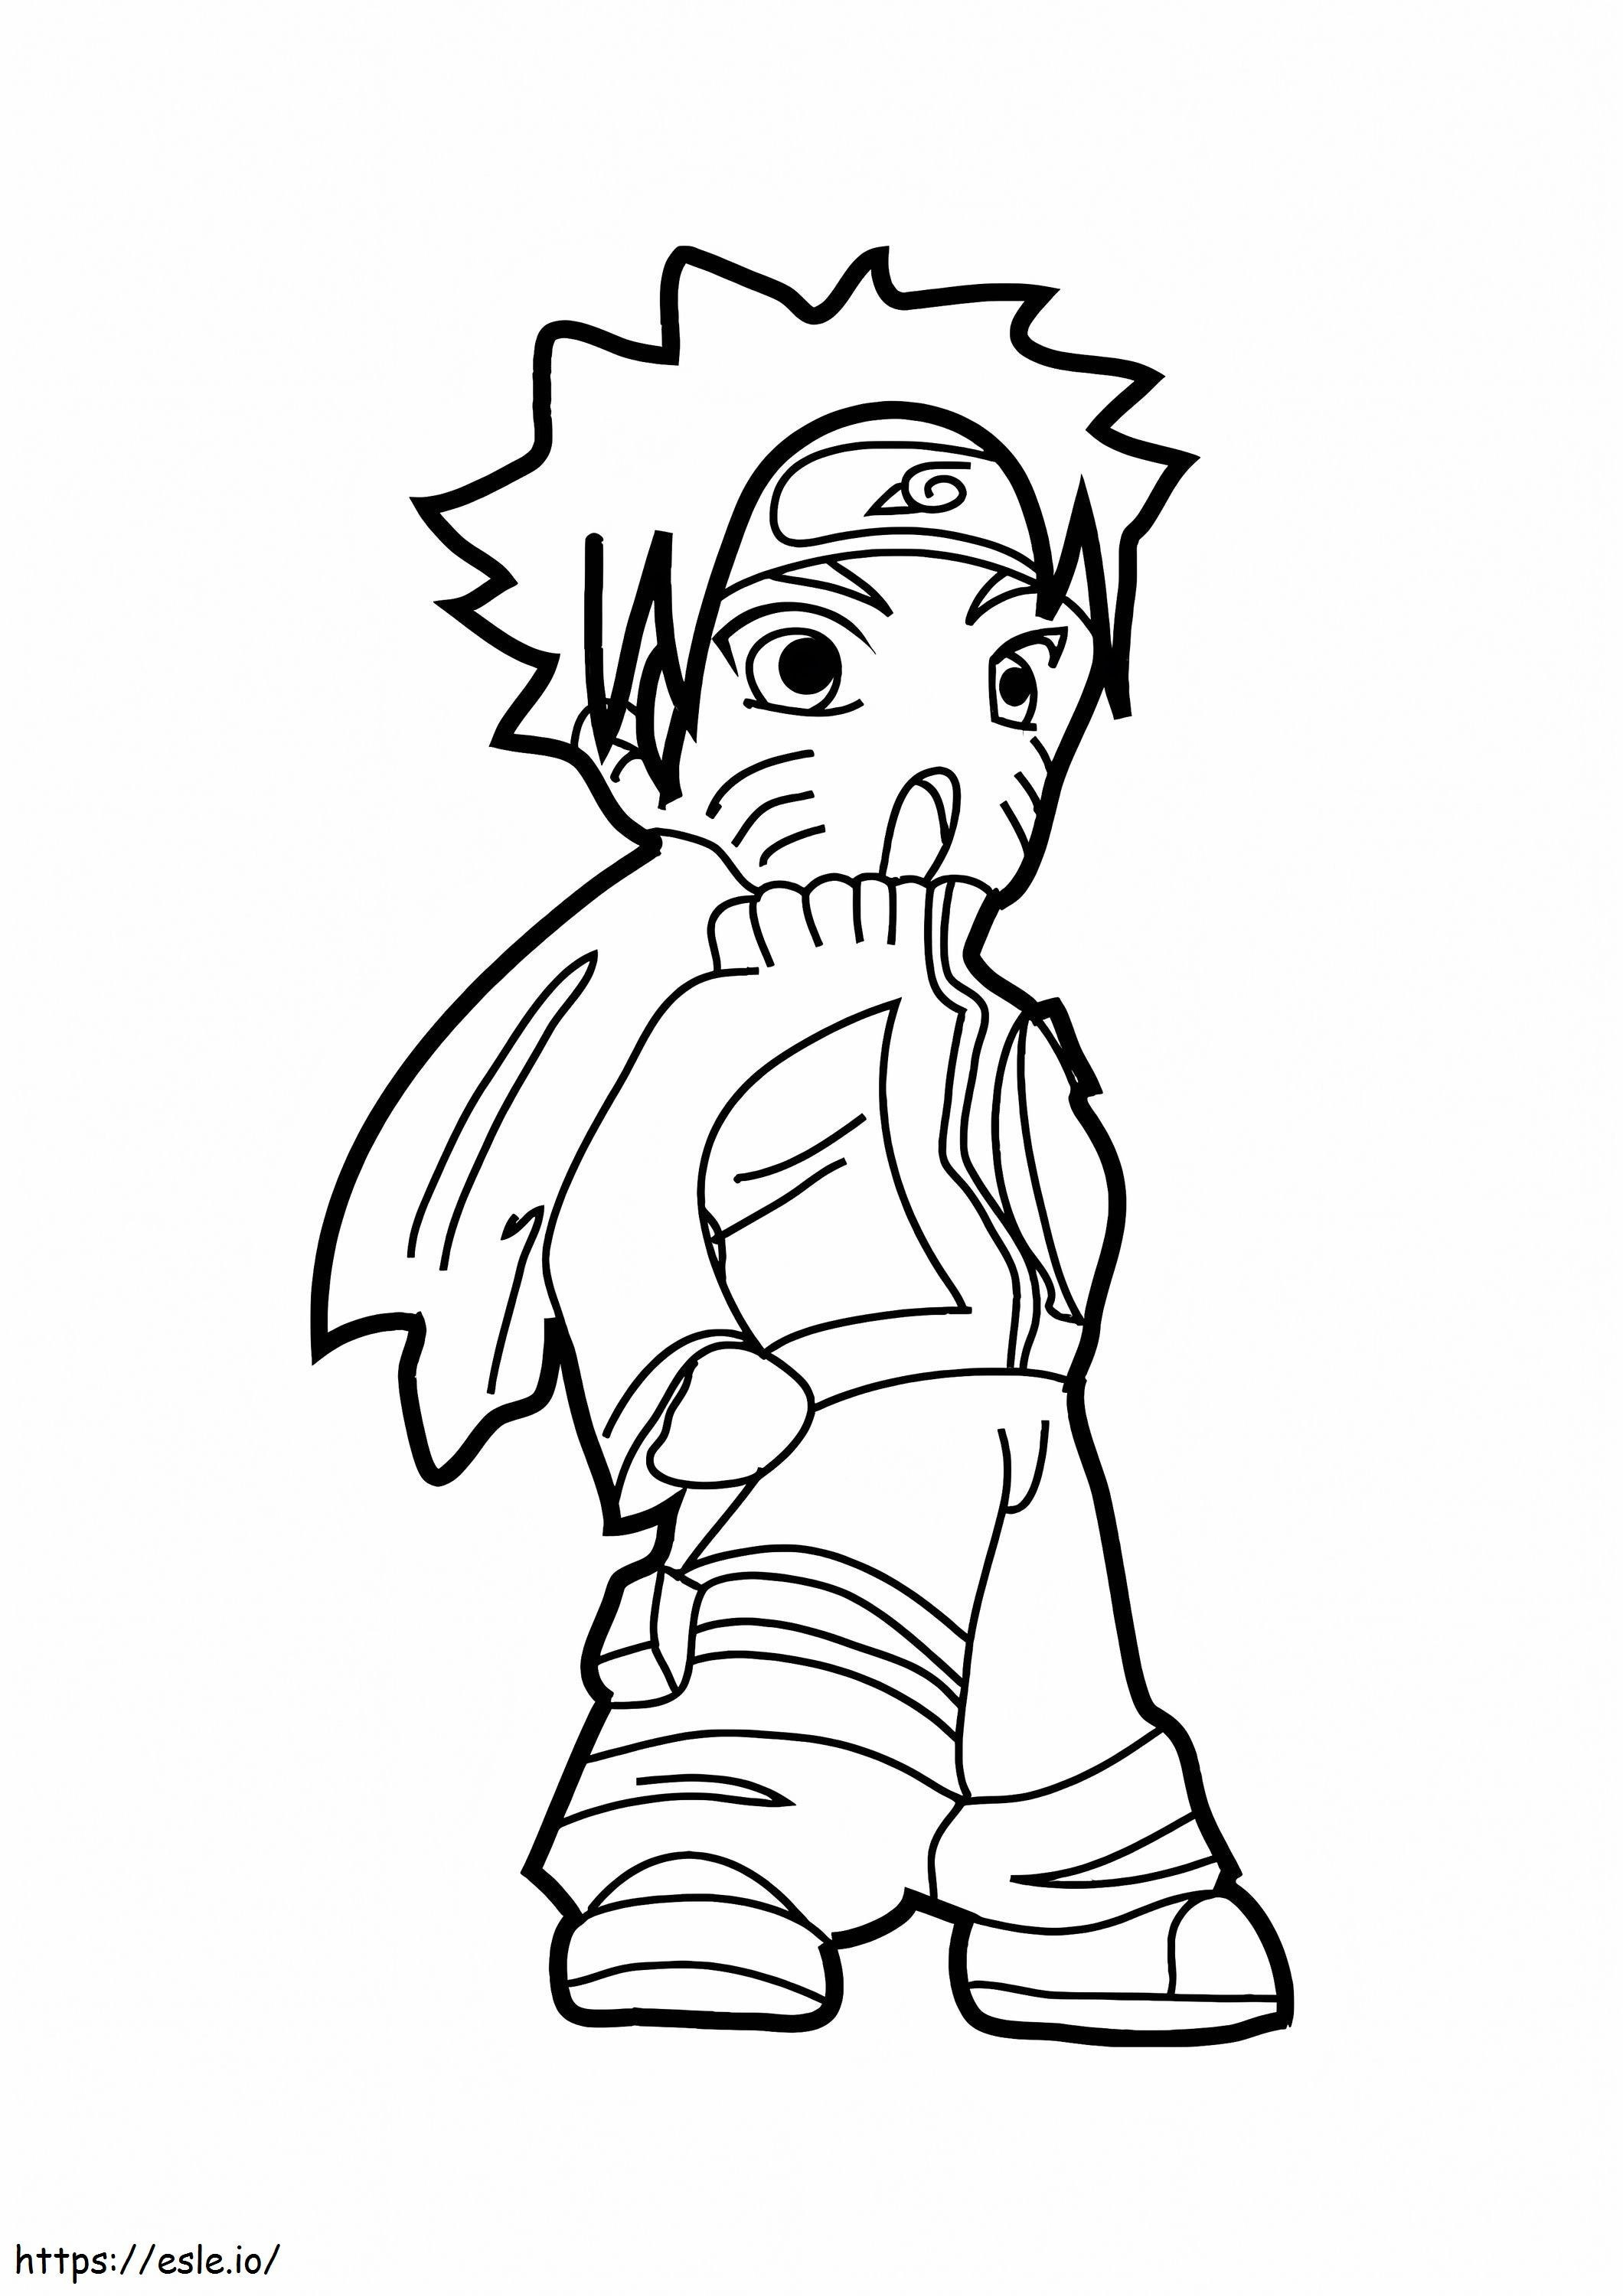 Naruto Mignon coloring page